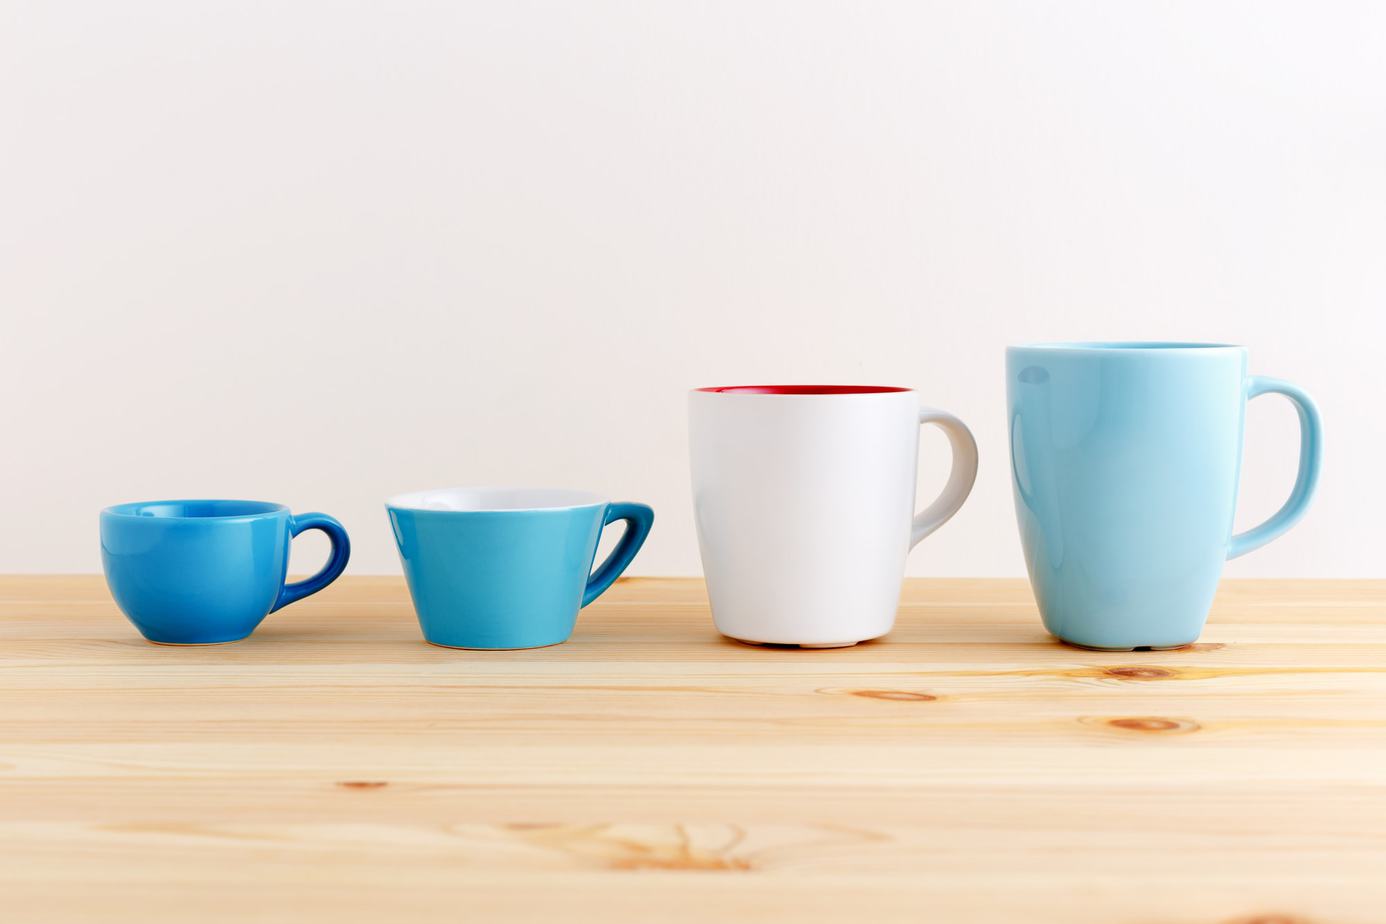 https://www.roastycoffee.com/wp-content/uploads/Coffee-Cup-vs-Mug.jpg